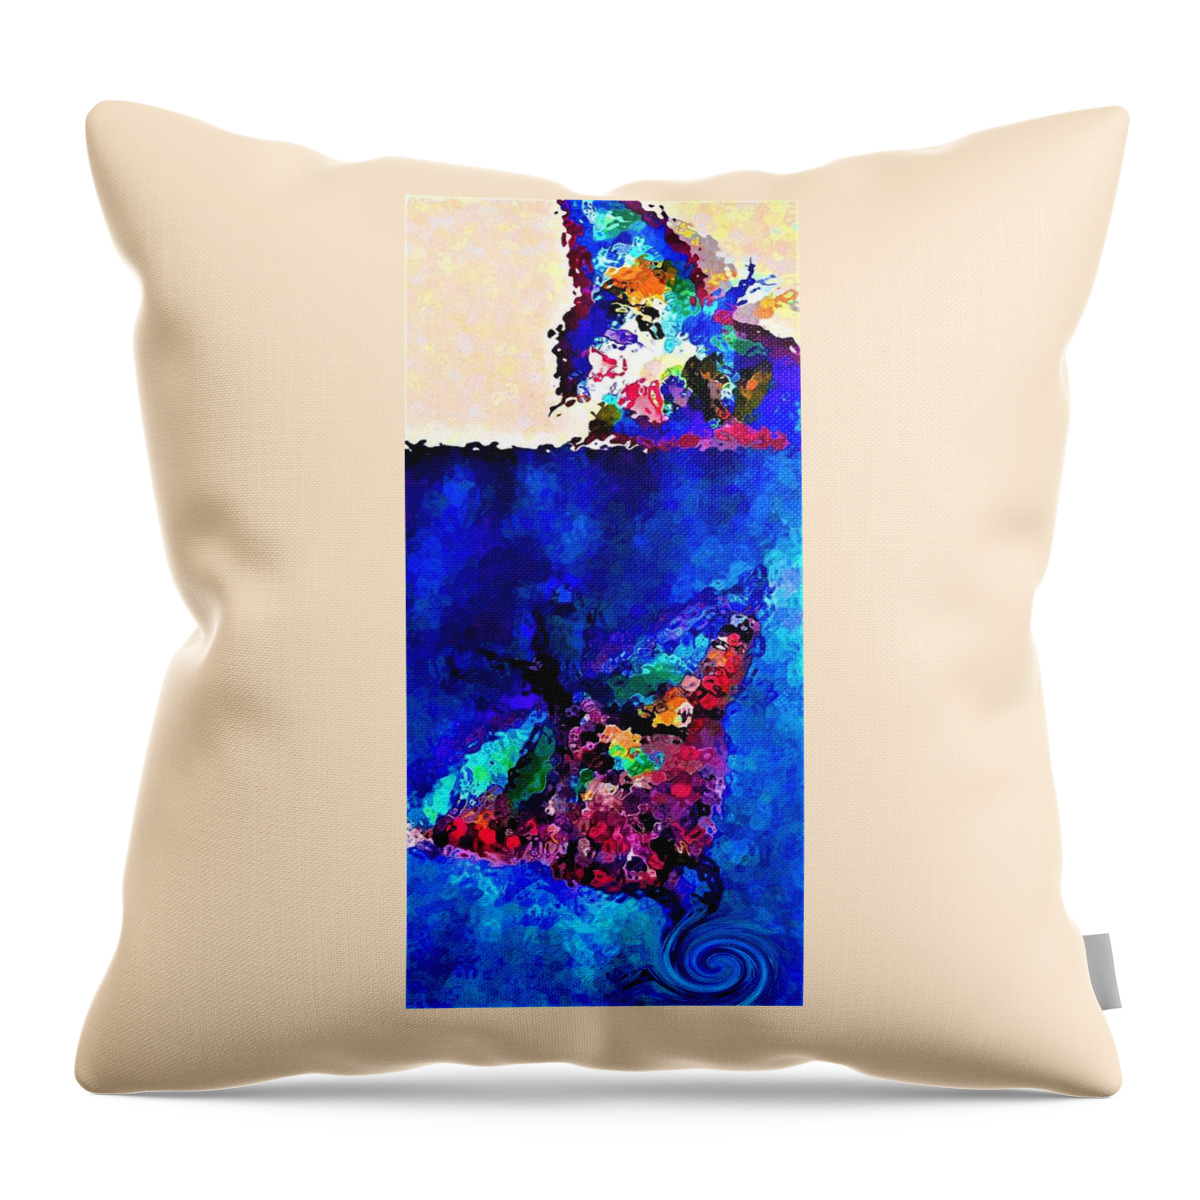 Butterflies Throw Pillow featuring the digital art Let Go Fly Away Into The Light By Lisa Kaiser by Lisa Kaiser